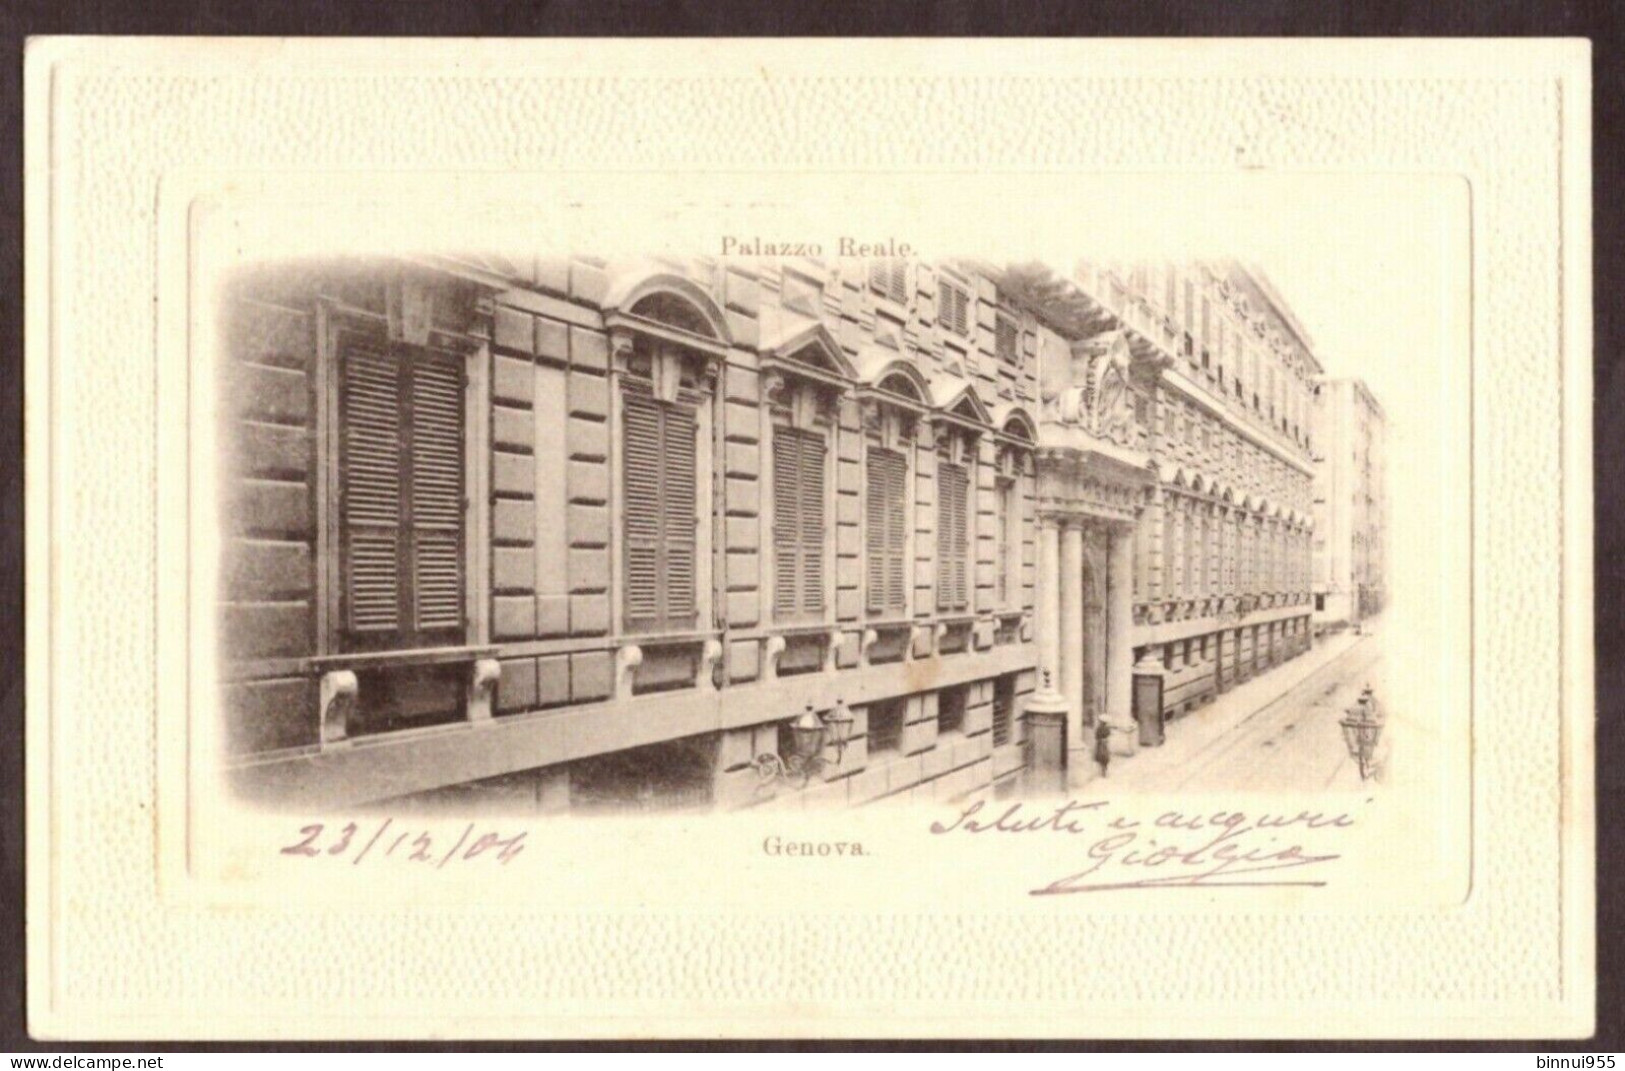 Cartolina Genova Palazzo Reale - Viaggiata - Genova (Genoa)